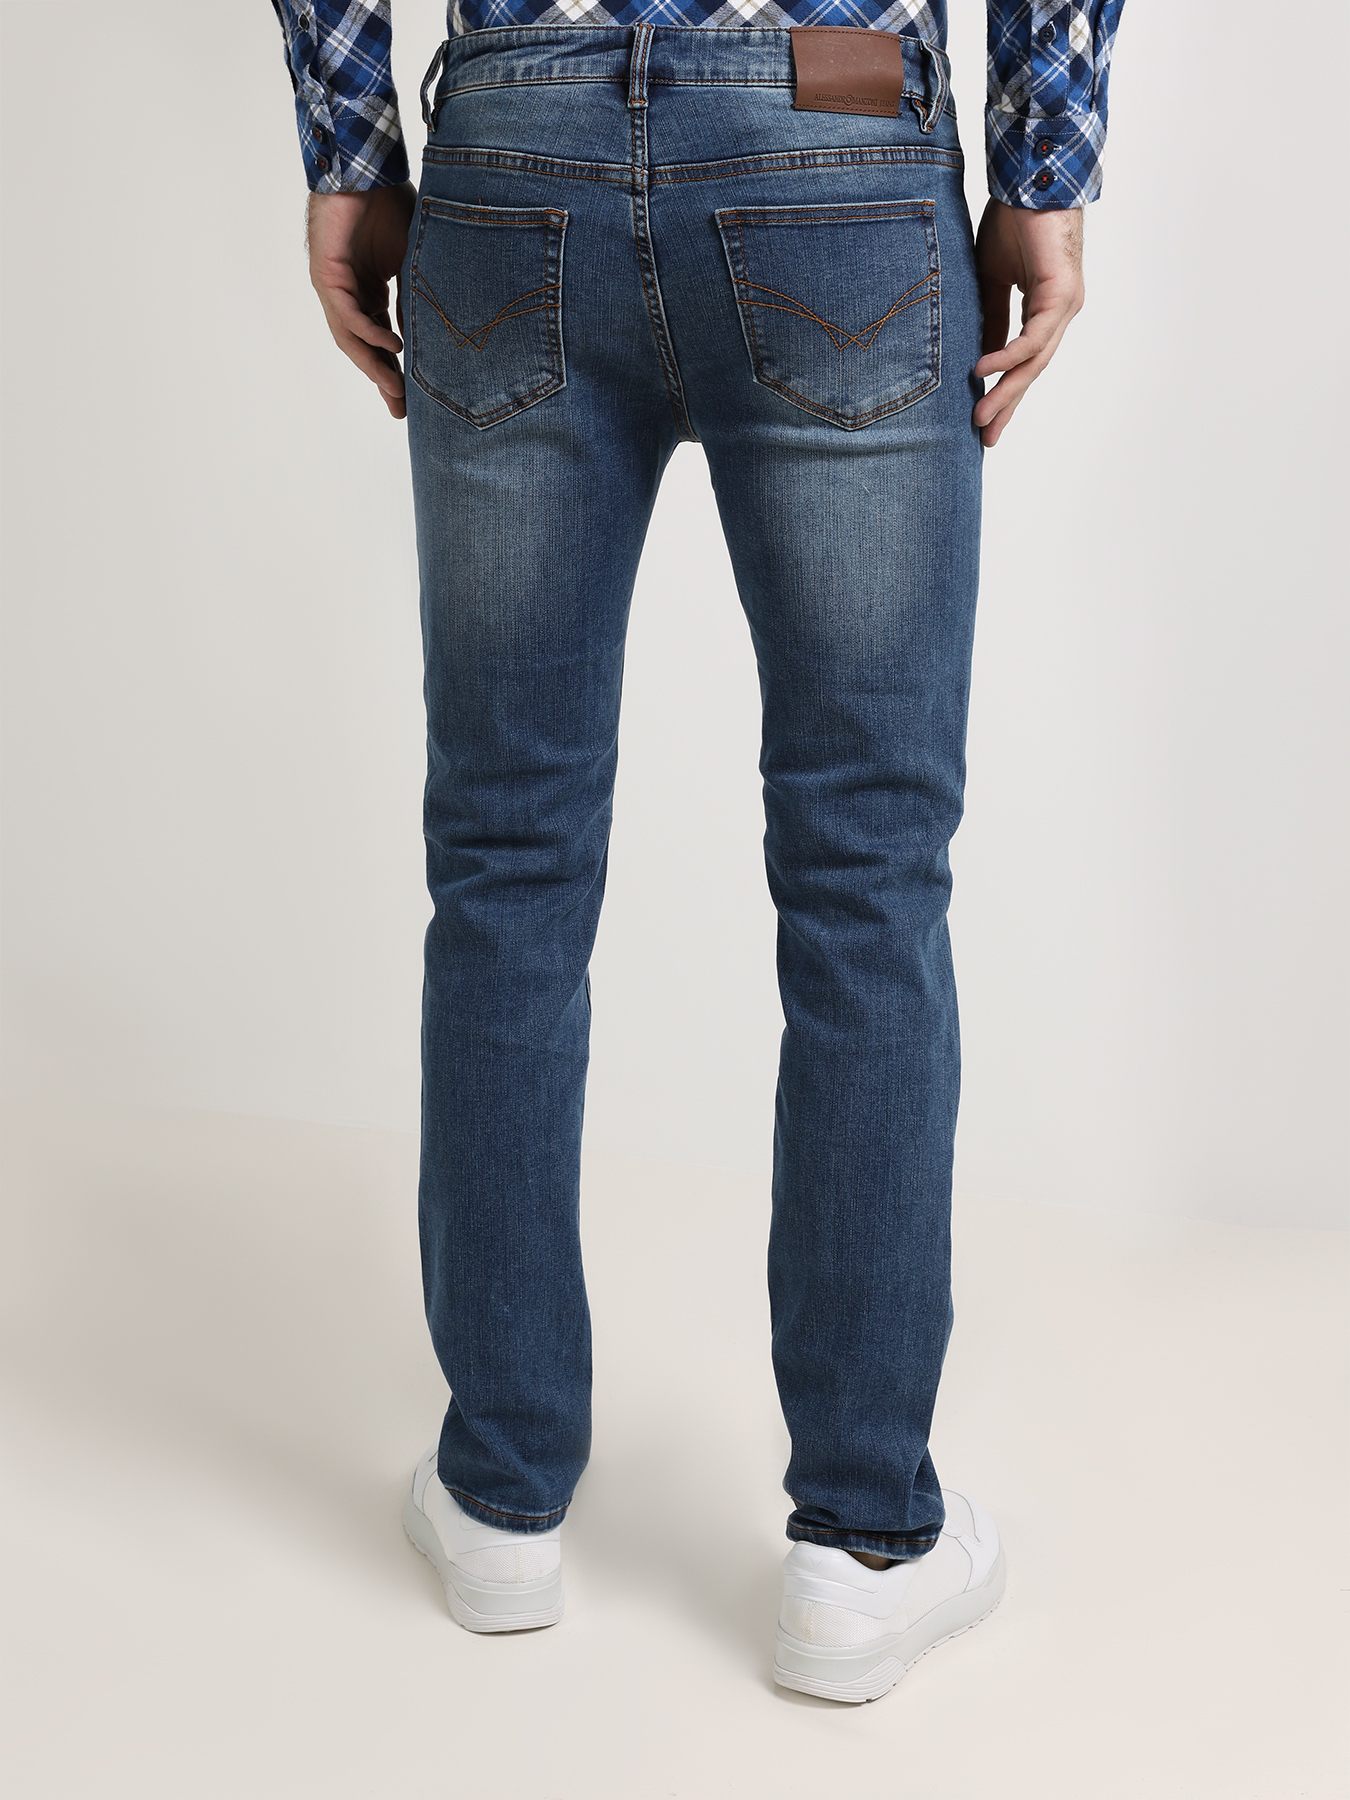 Alessandro Manzoni Jeans Зауженные джинсы 348334-024 Фото 2